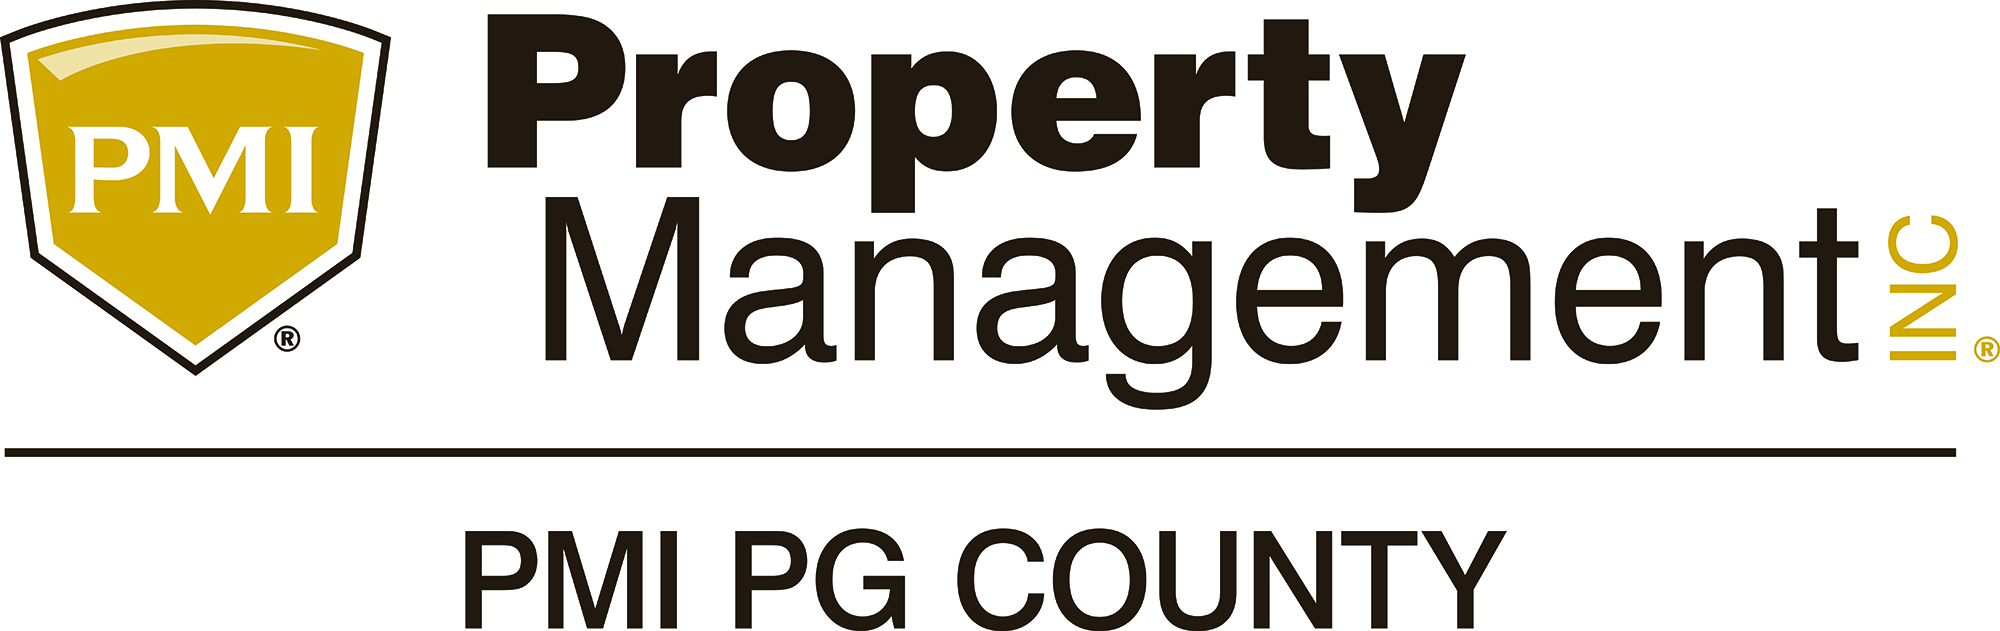 PMI PG County logo